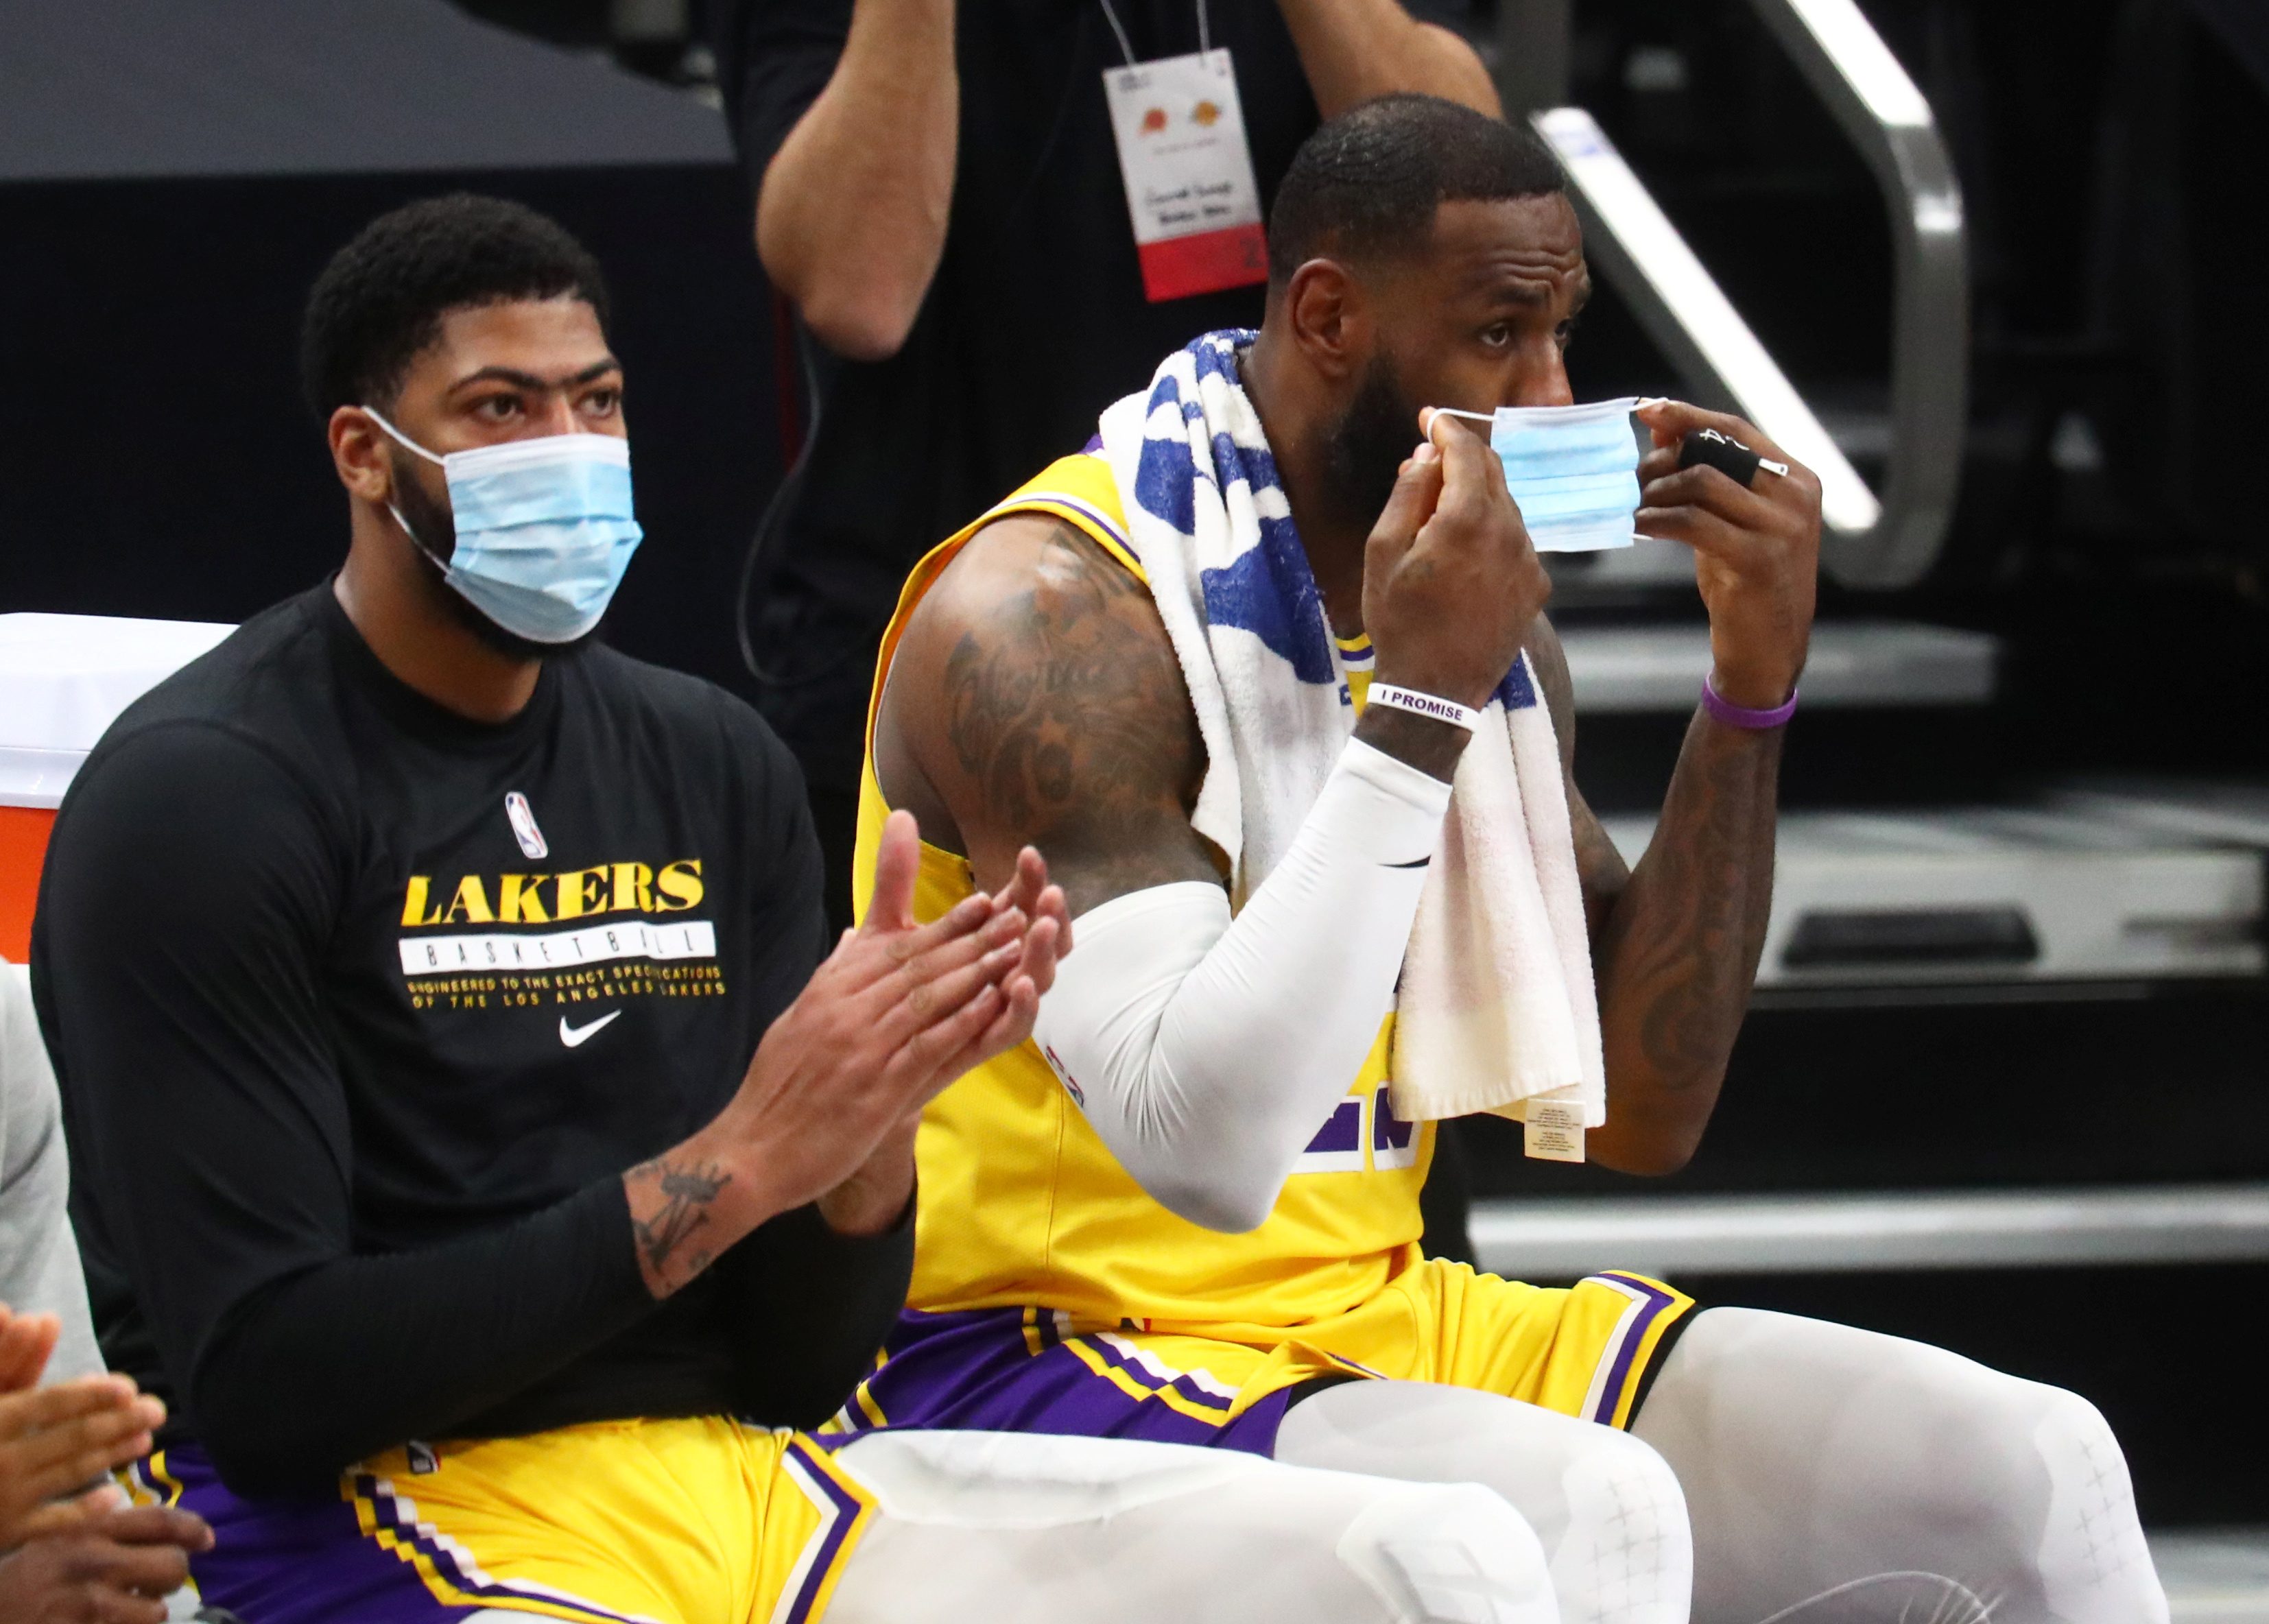 NBA tightens health protocols as COVID-19 impacts season